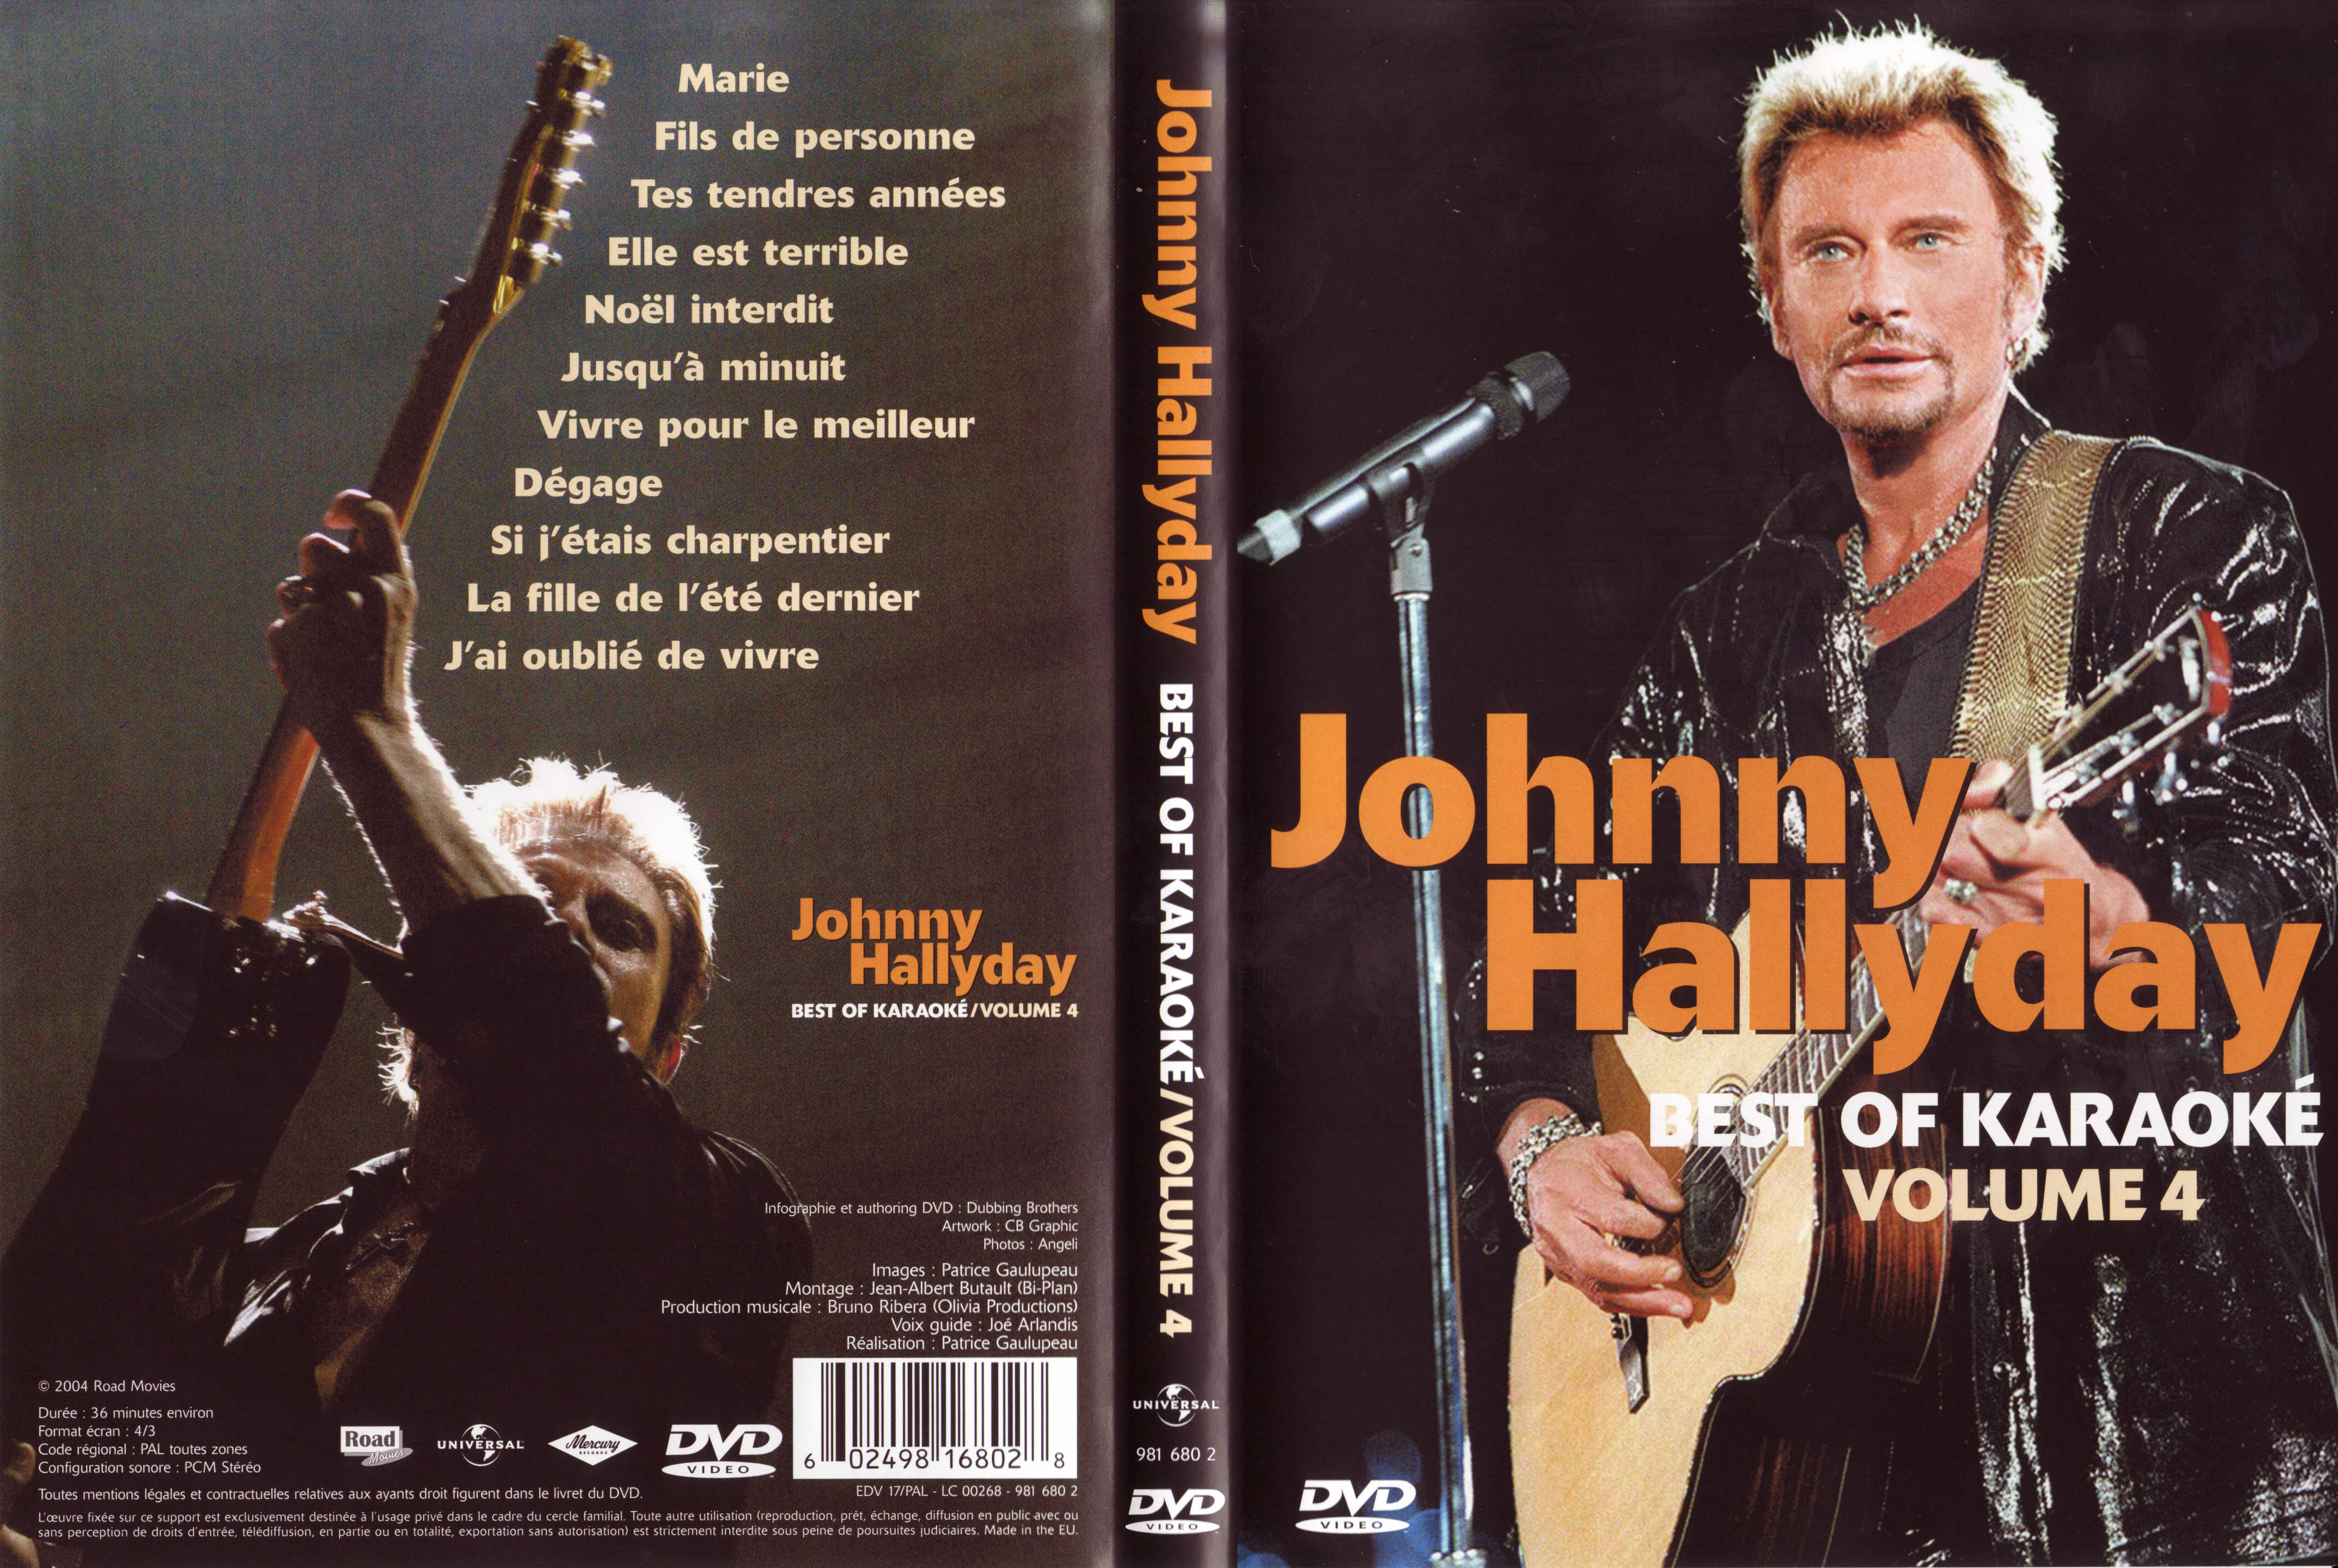 Jaquette DVD Johnny hallyday - best of karaoke vol 4